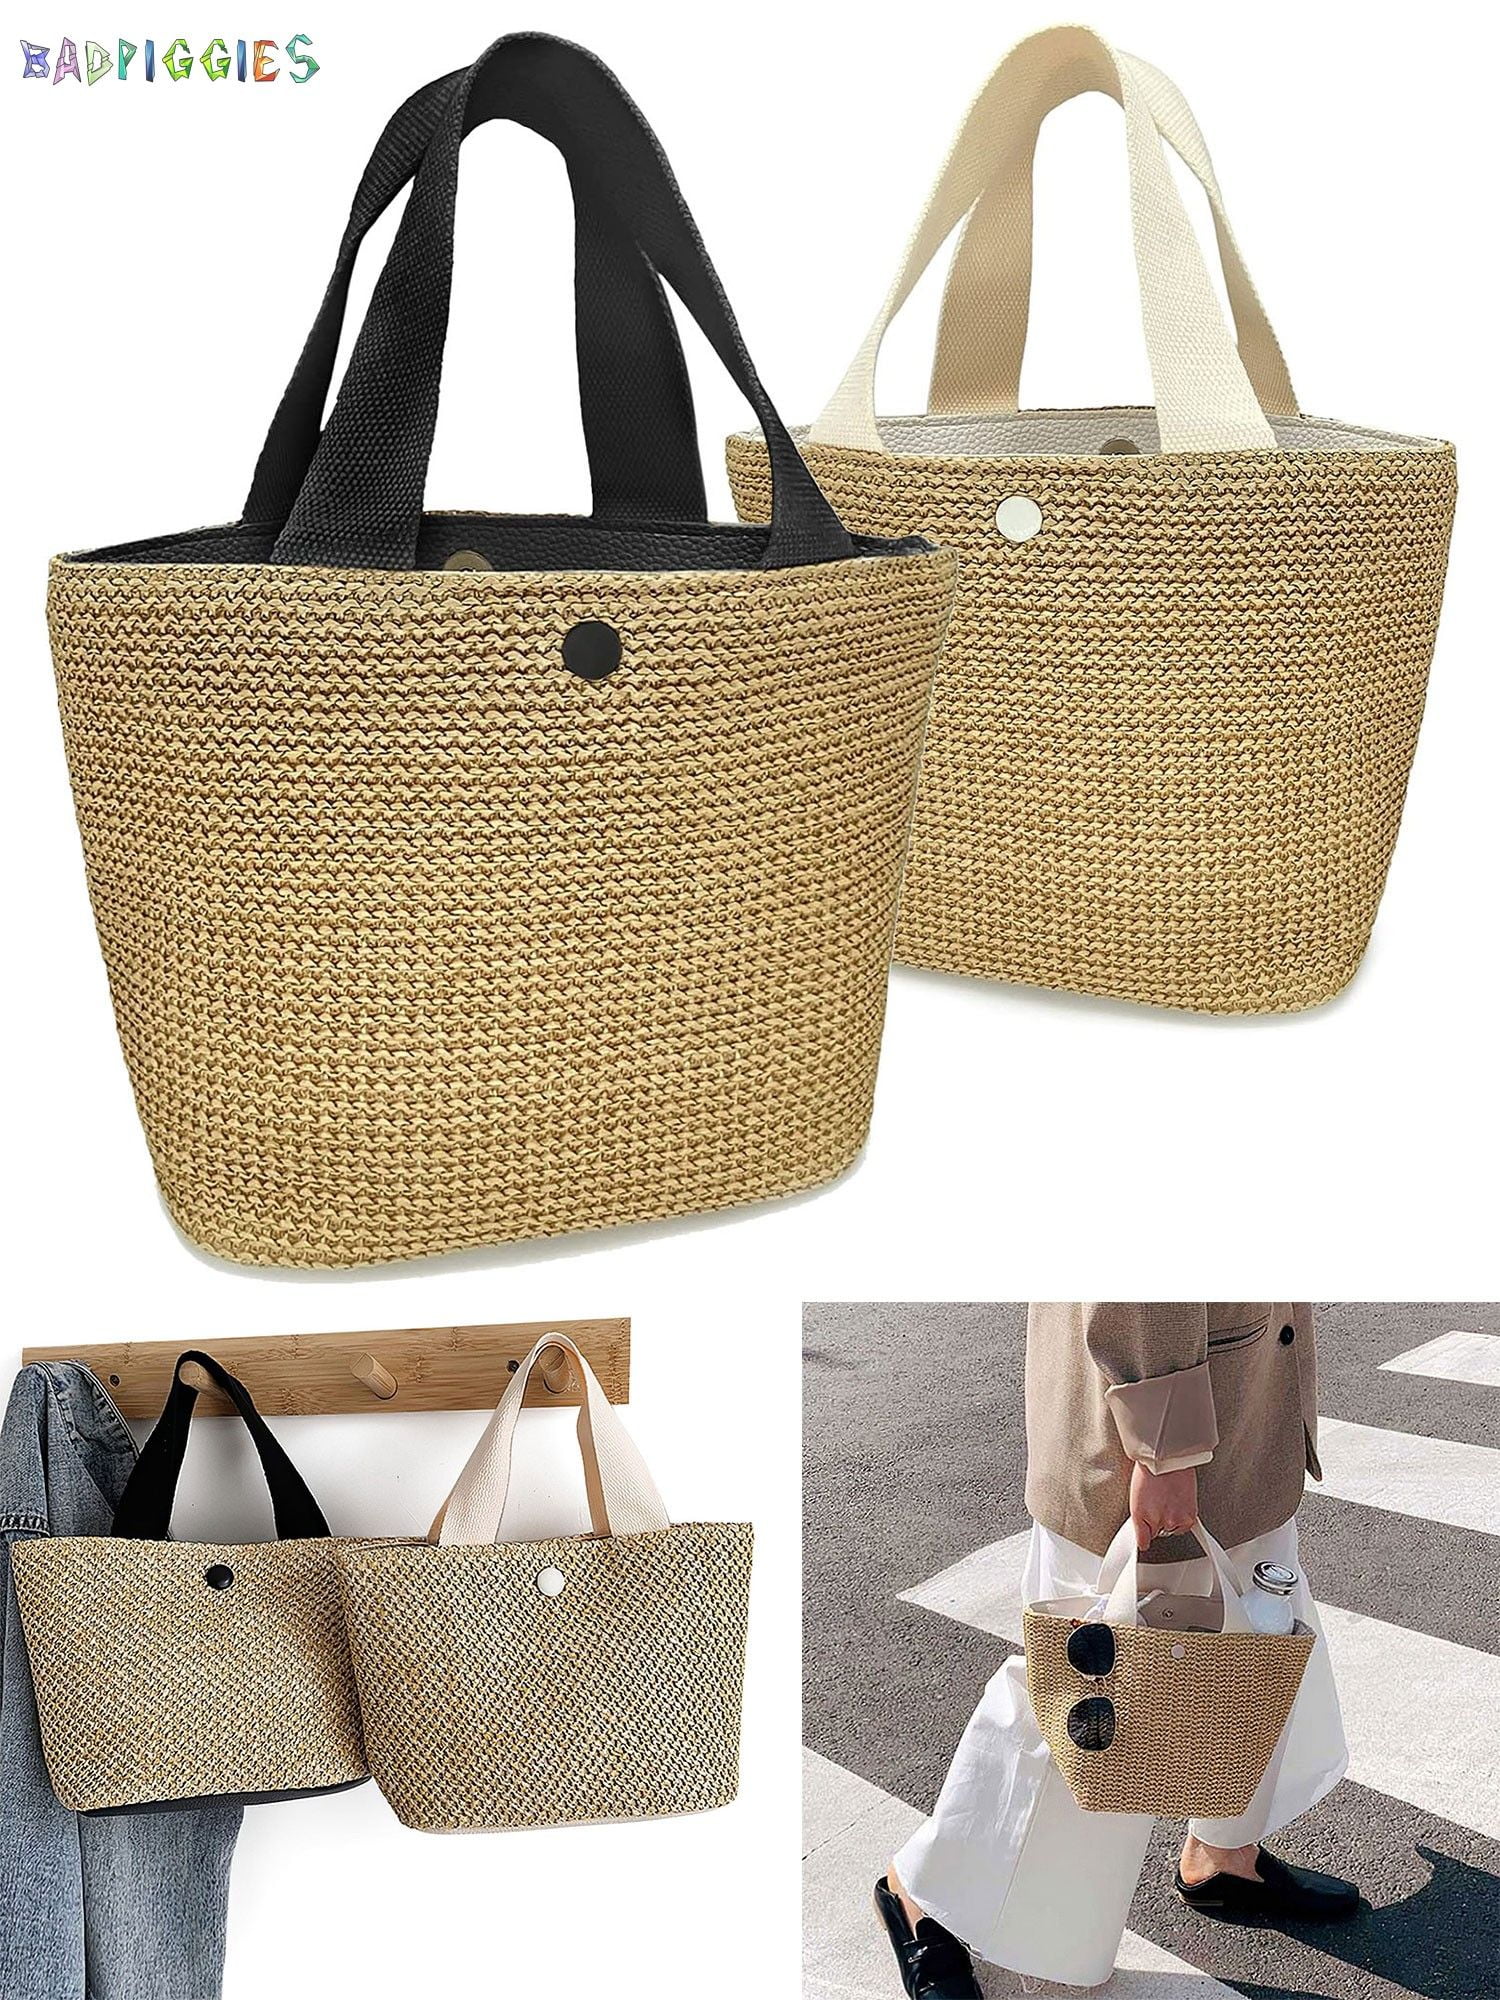 BadPiggies Straw Tote Bag Boho Summer Beach Woven Bag with Handles ...